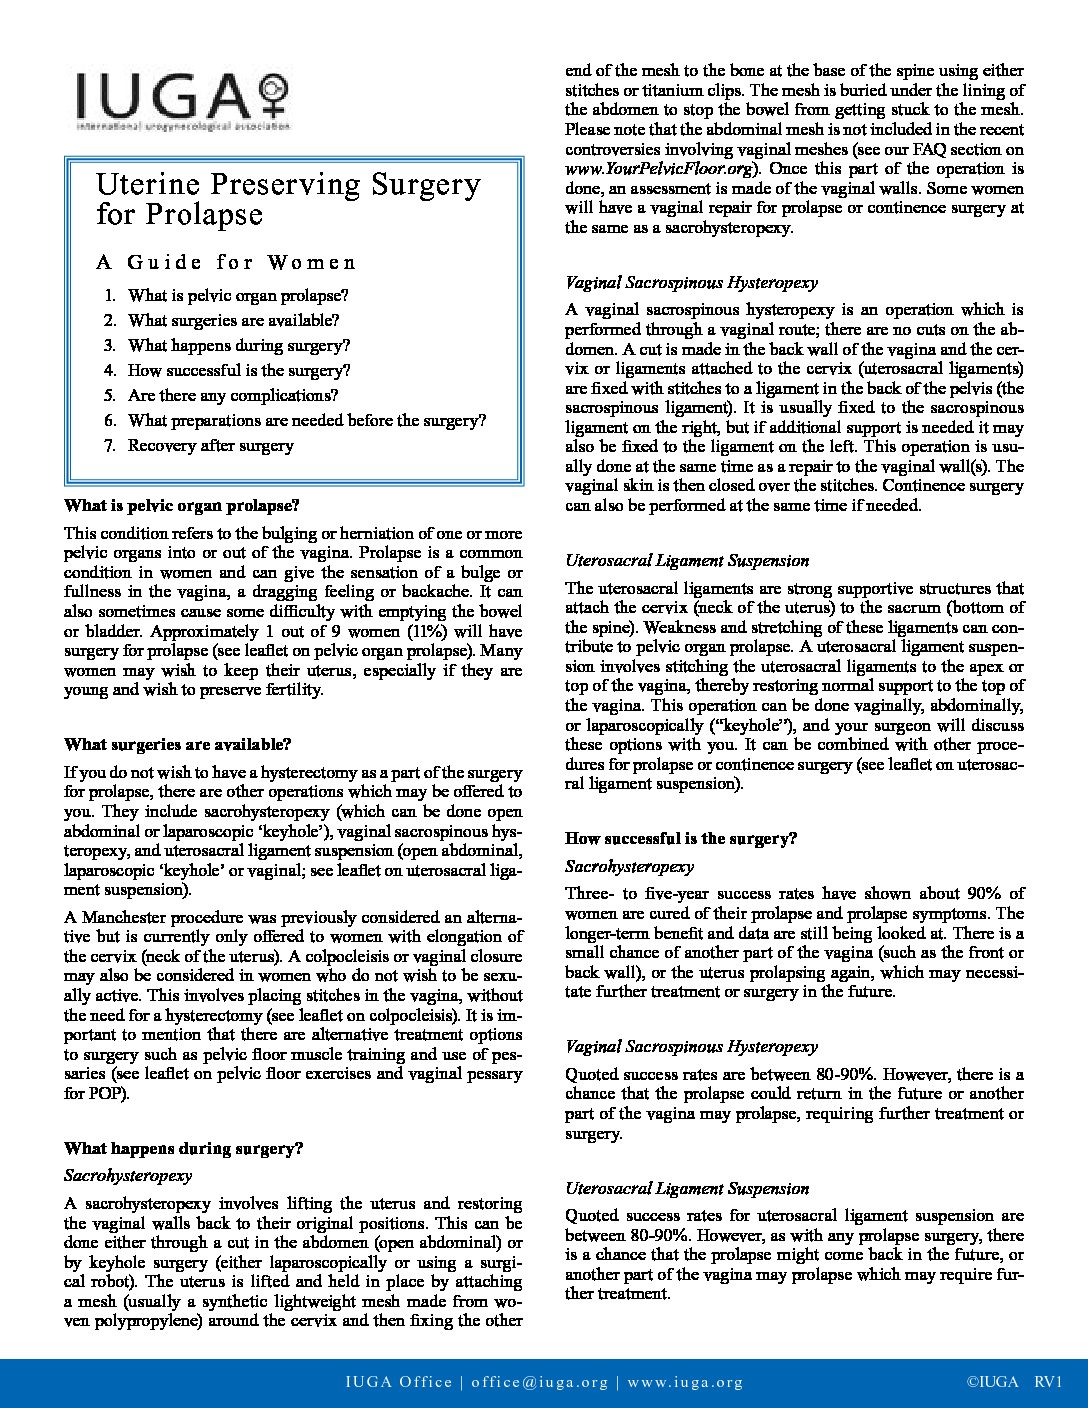 Uterus preservation in pelvic organ prolapse surgery